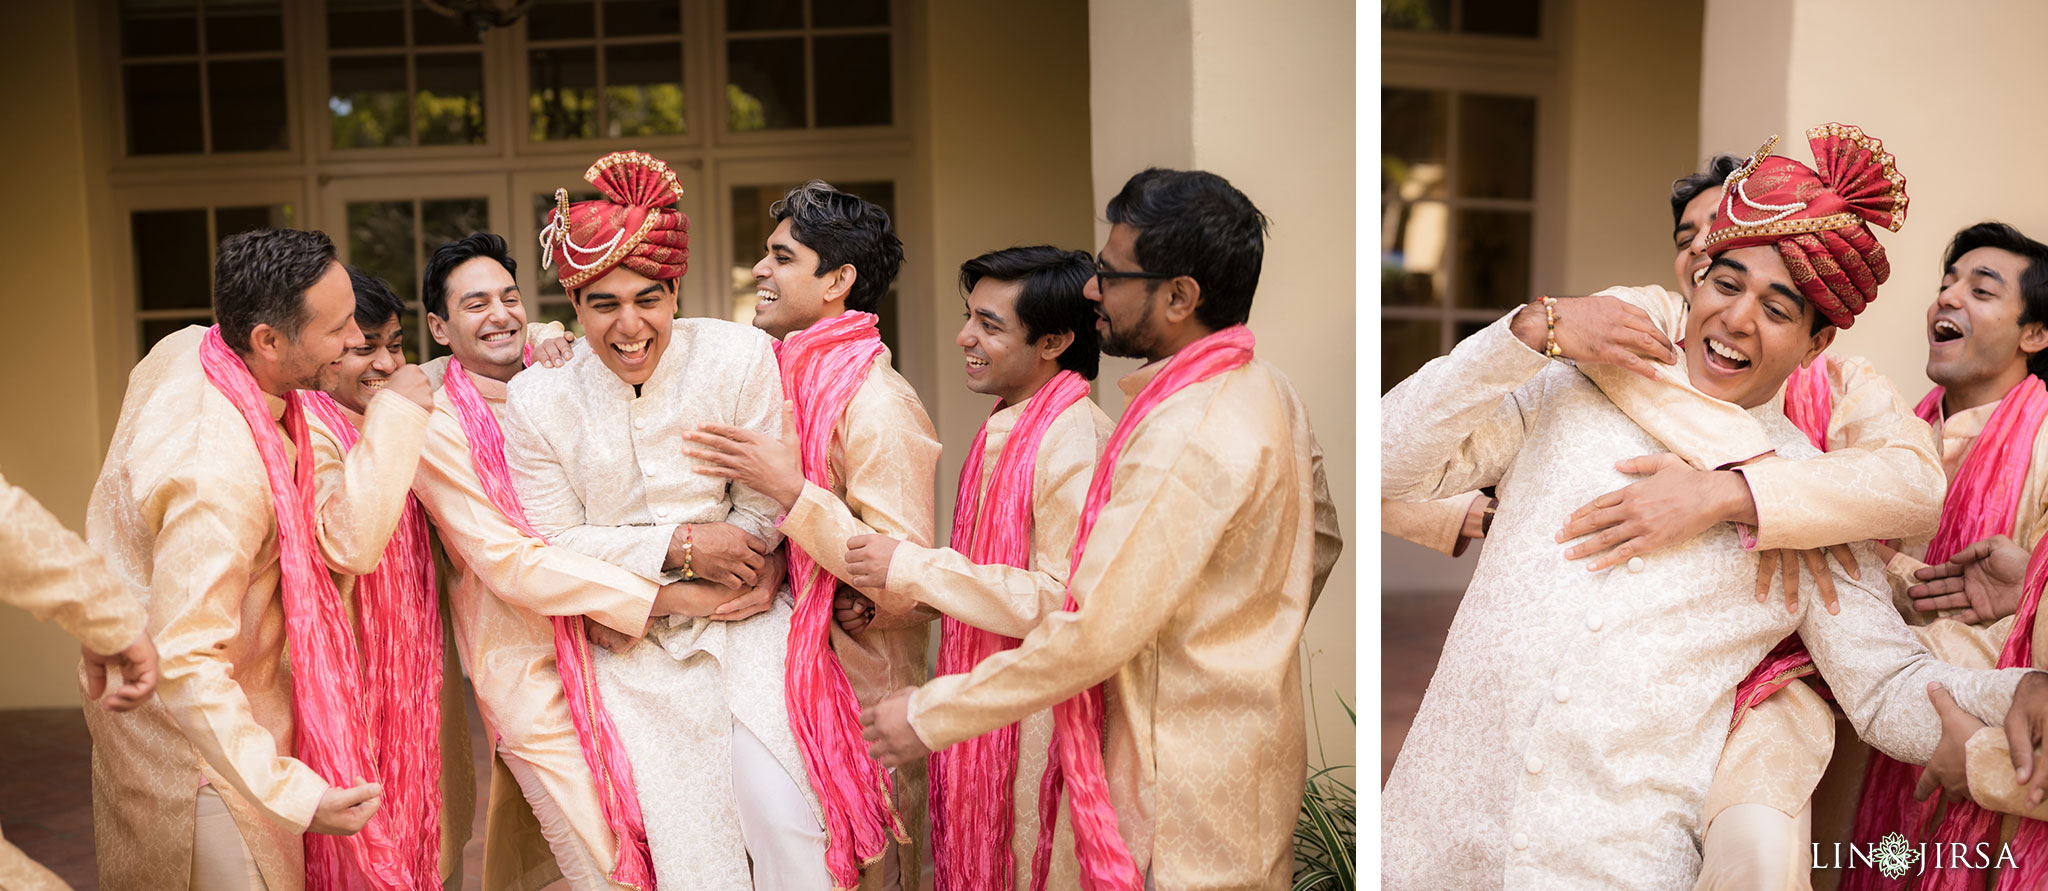 13 ritz carlton laguna niguel indian groomsmen wedding photography